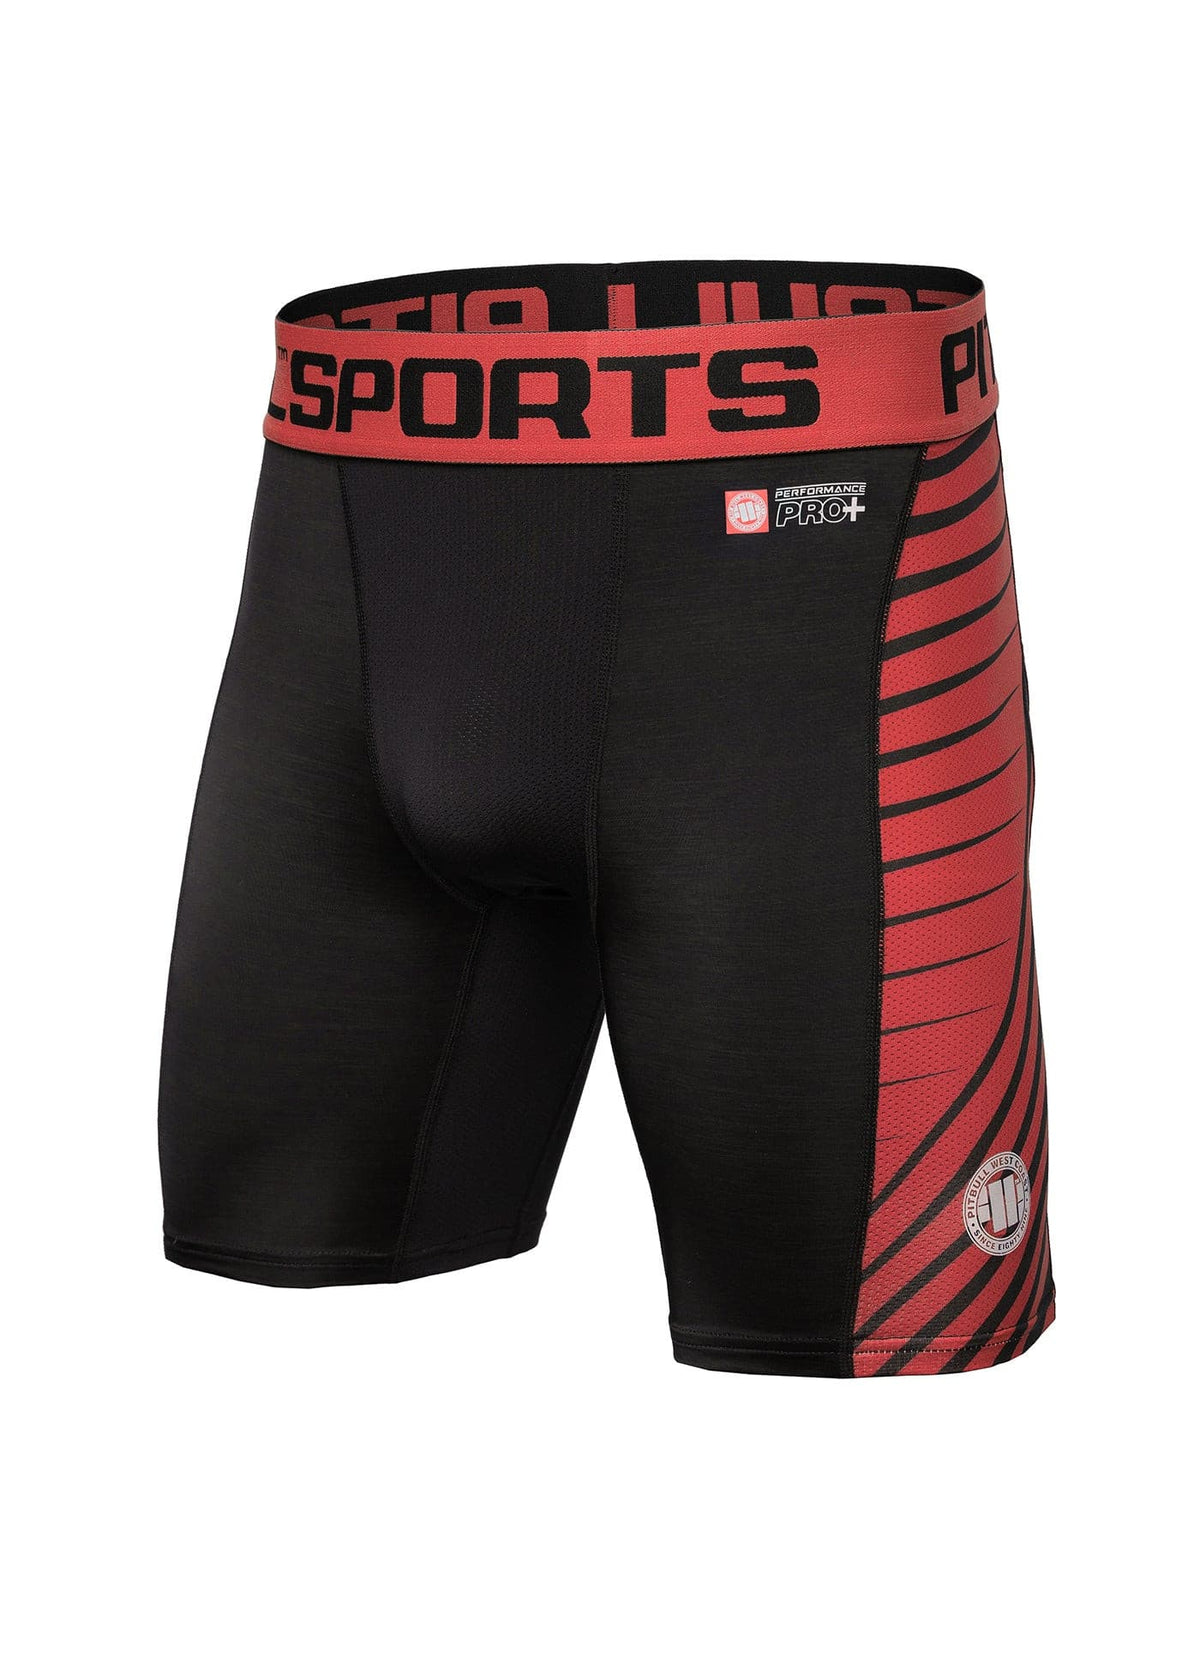 Compression shorts PRO PLUS MLG Red - Pitbull West Coast U.S.A. 